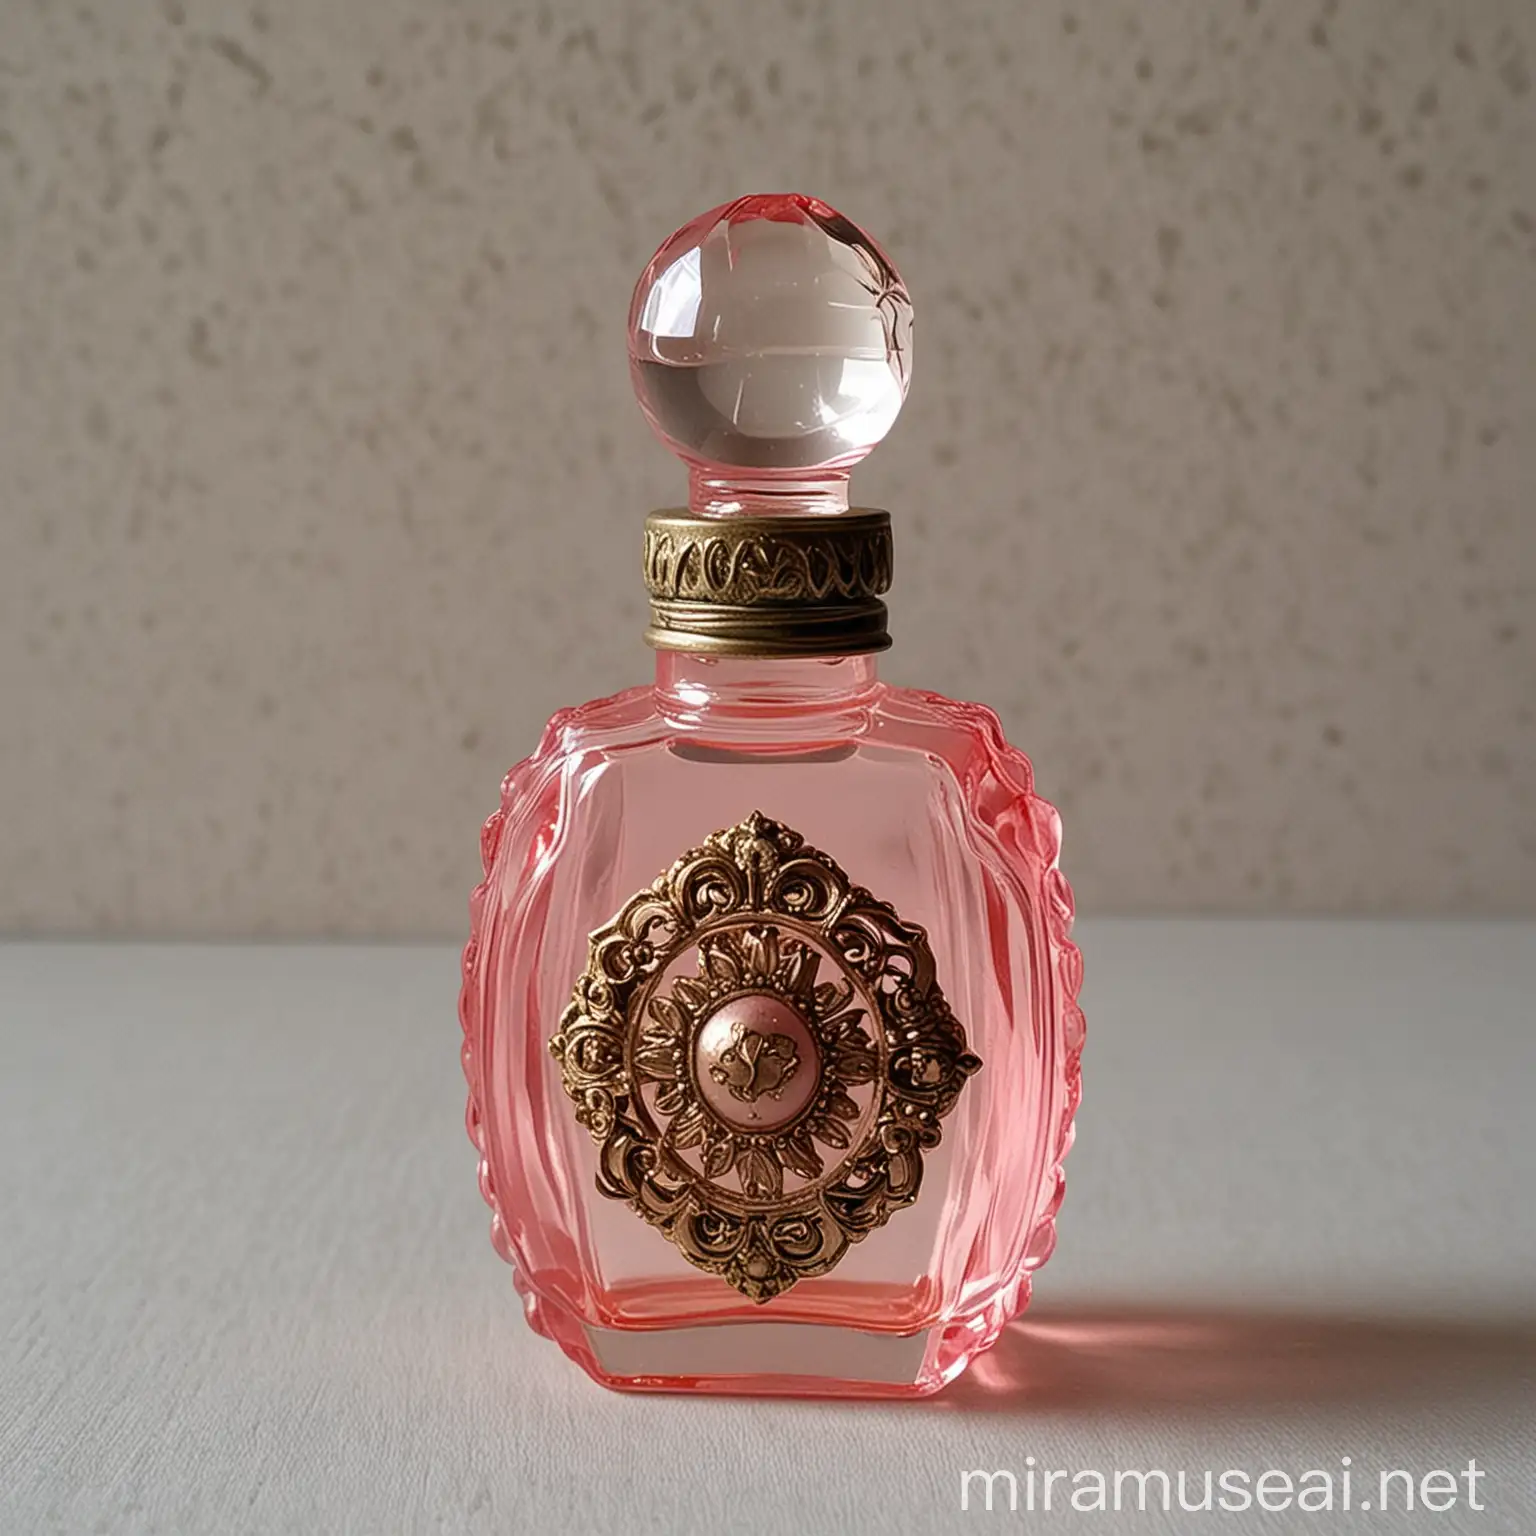 Vintage Pink Perfume Oil Bottle with Floral Ornamentation